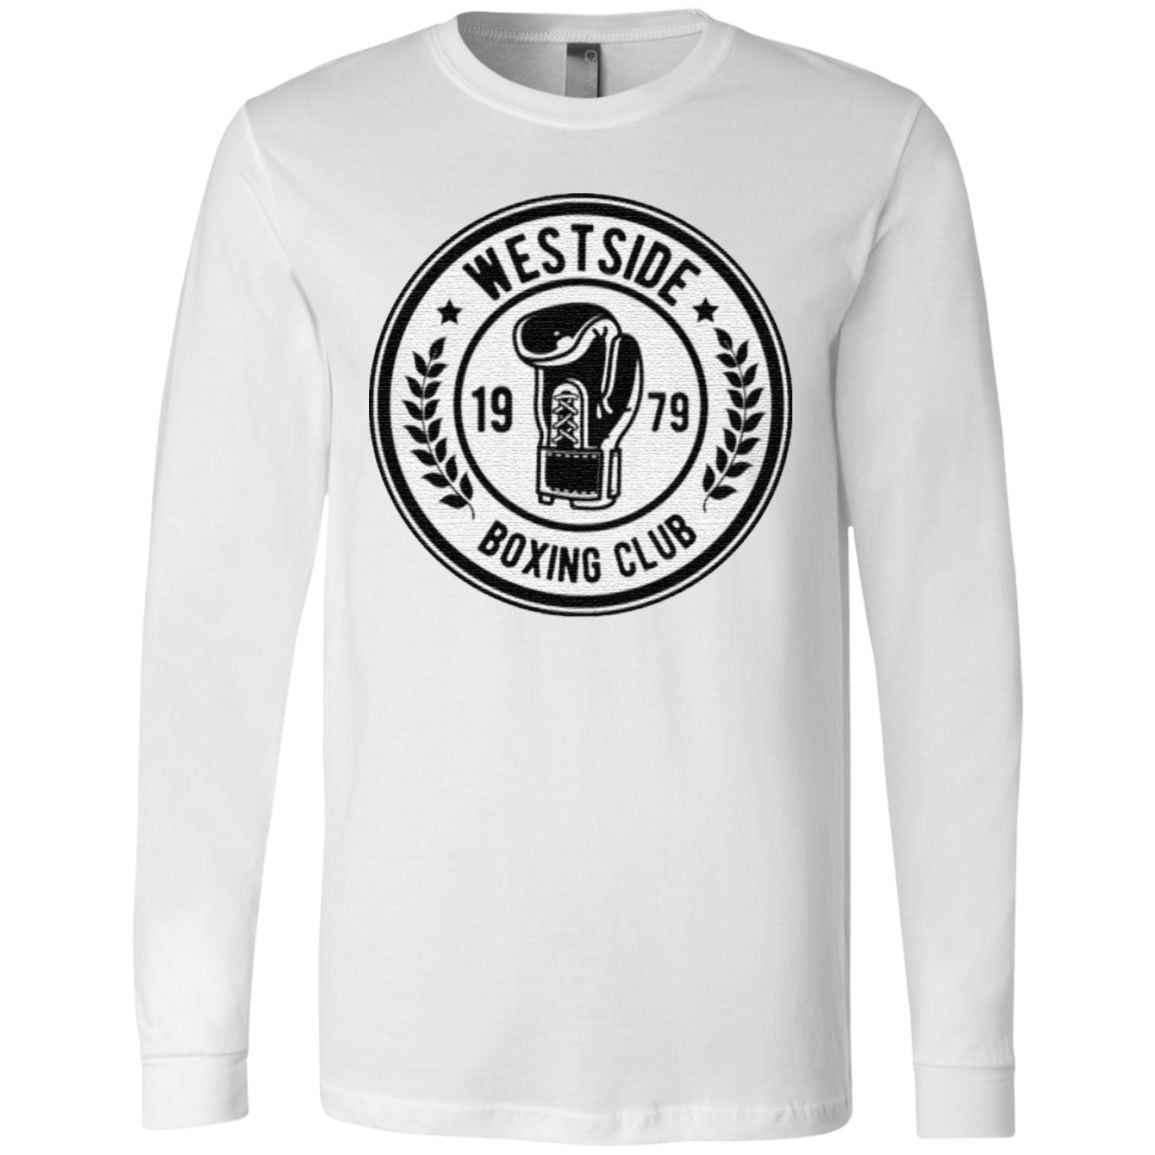 Westside Boxing Club 1979 T Shirt